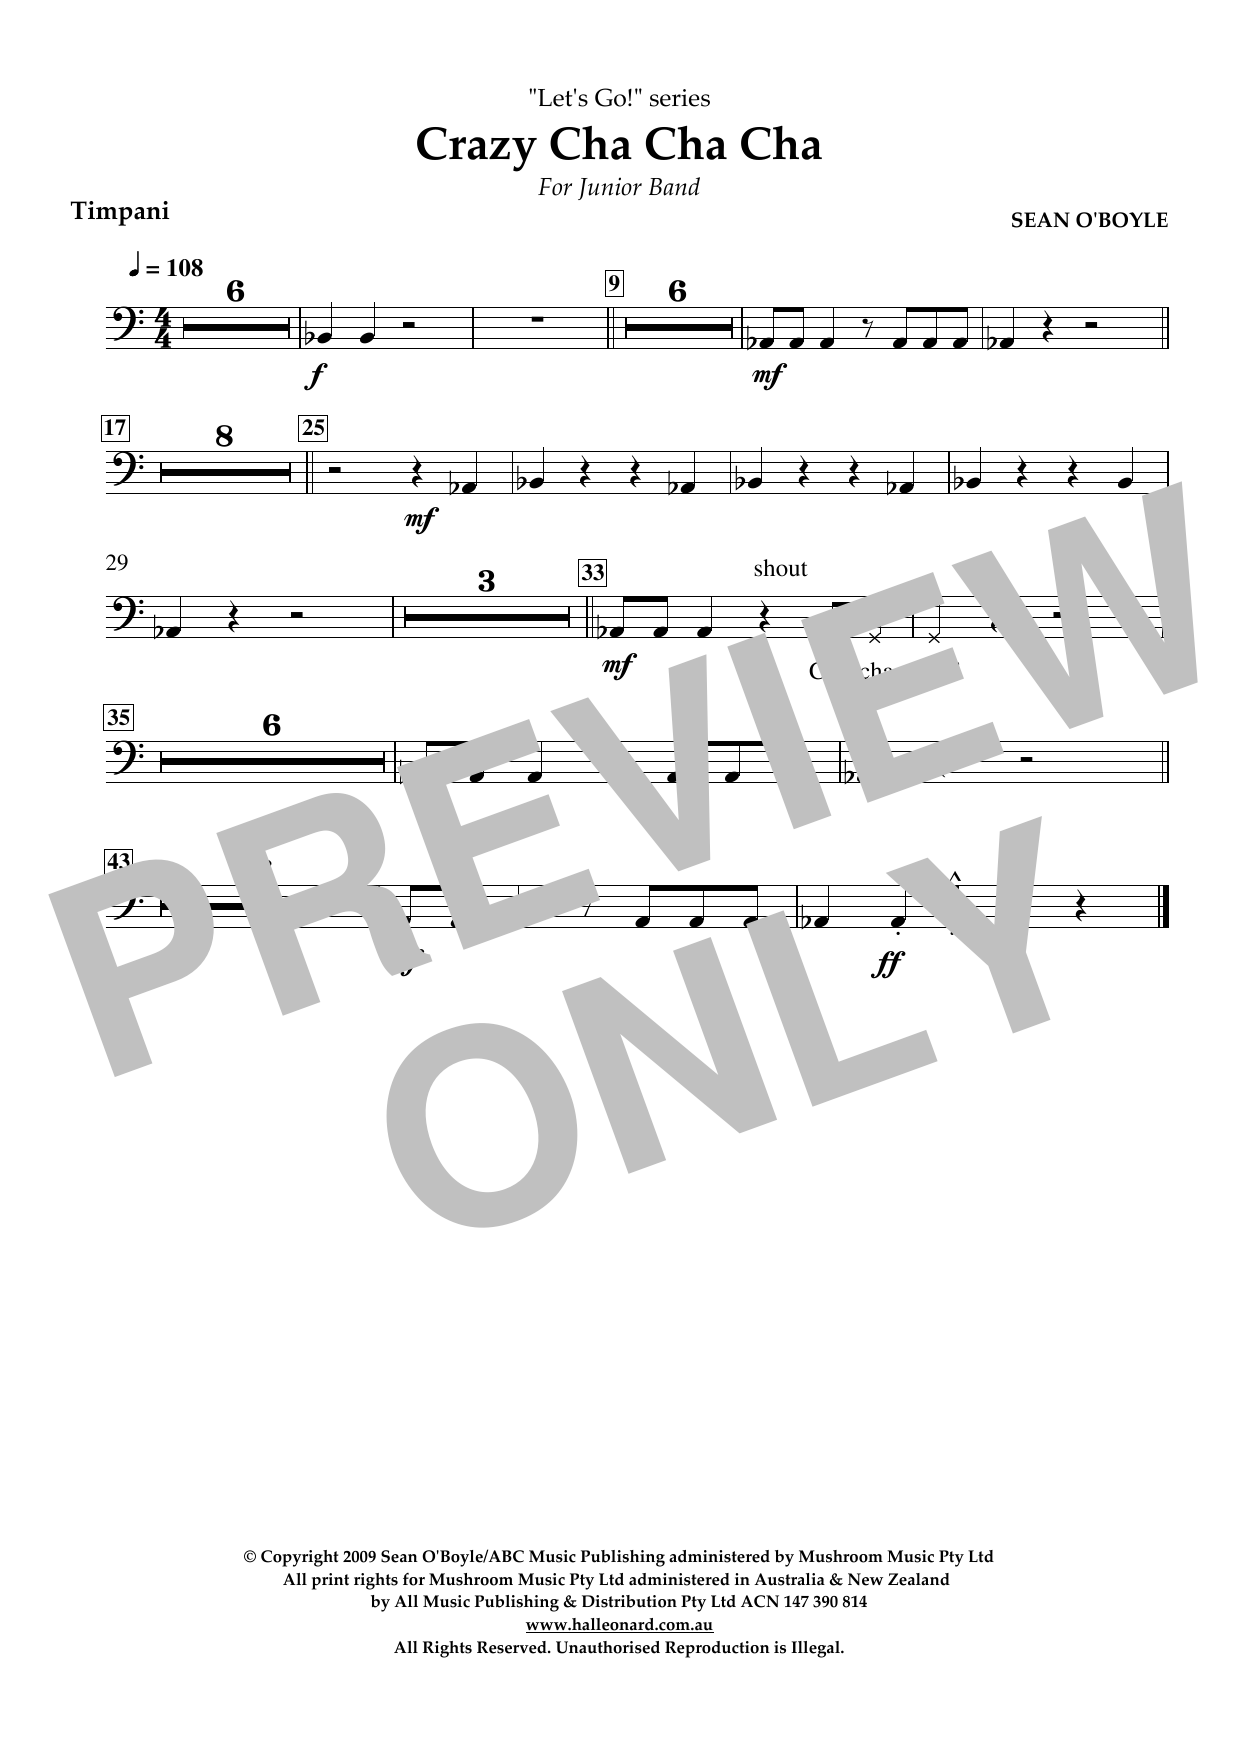 Sean O'Boyle Crazy Cha Cha Cha - Timpani Sheet Music Notes & Chords for Concert Band - Download or Print PDF